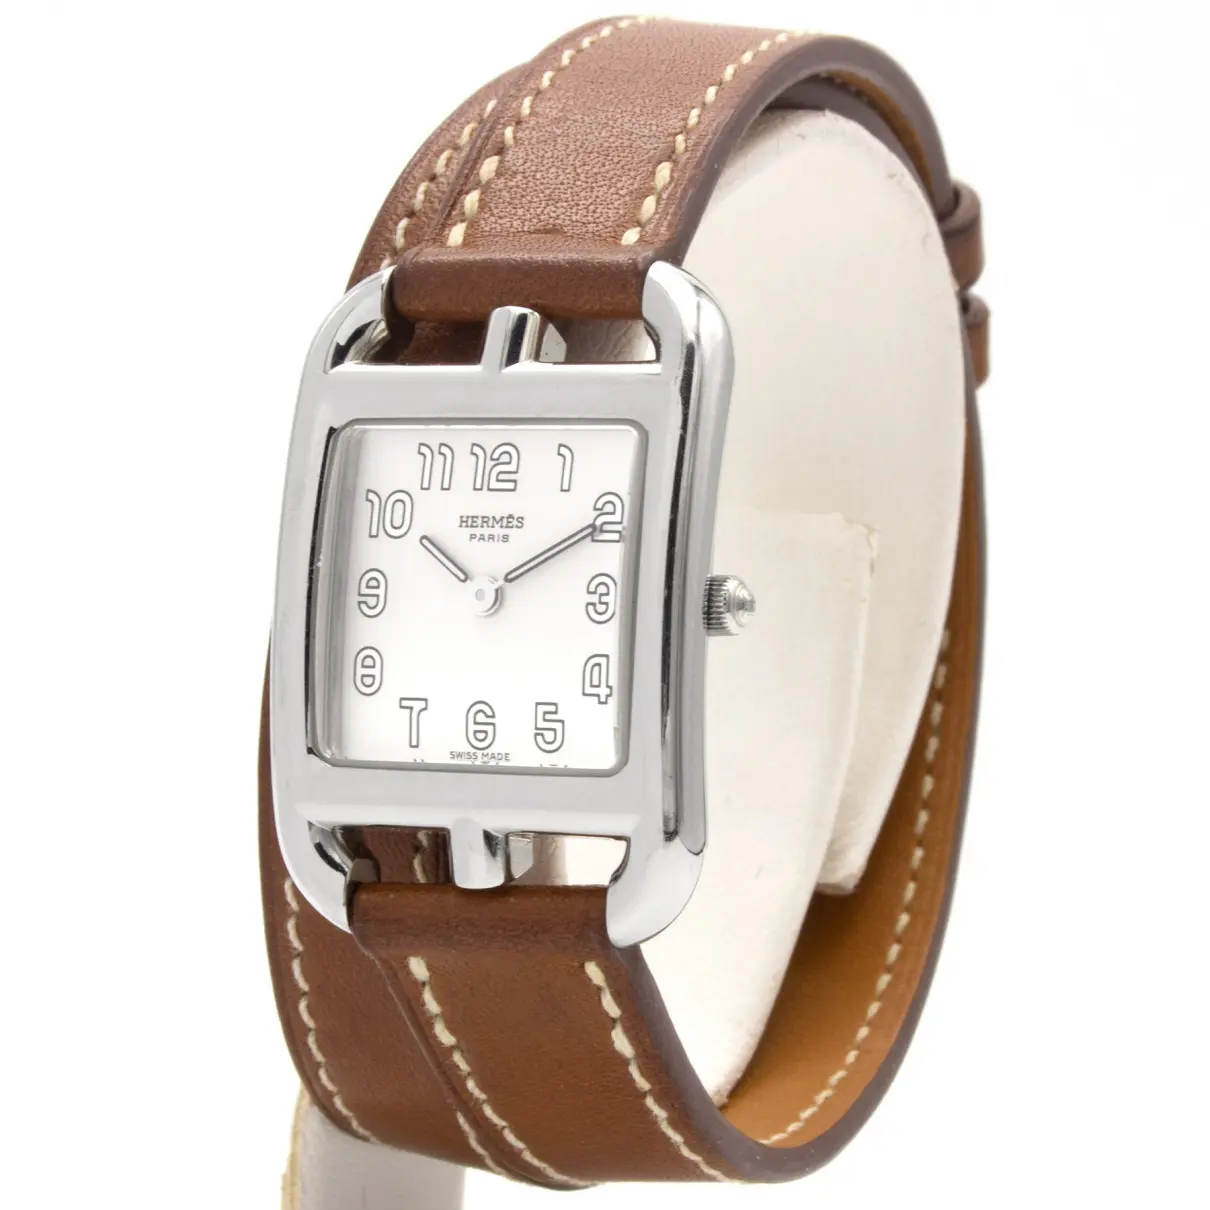 Buy Hermès Cape Cod watch online